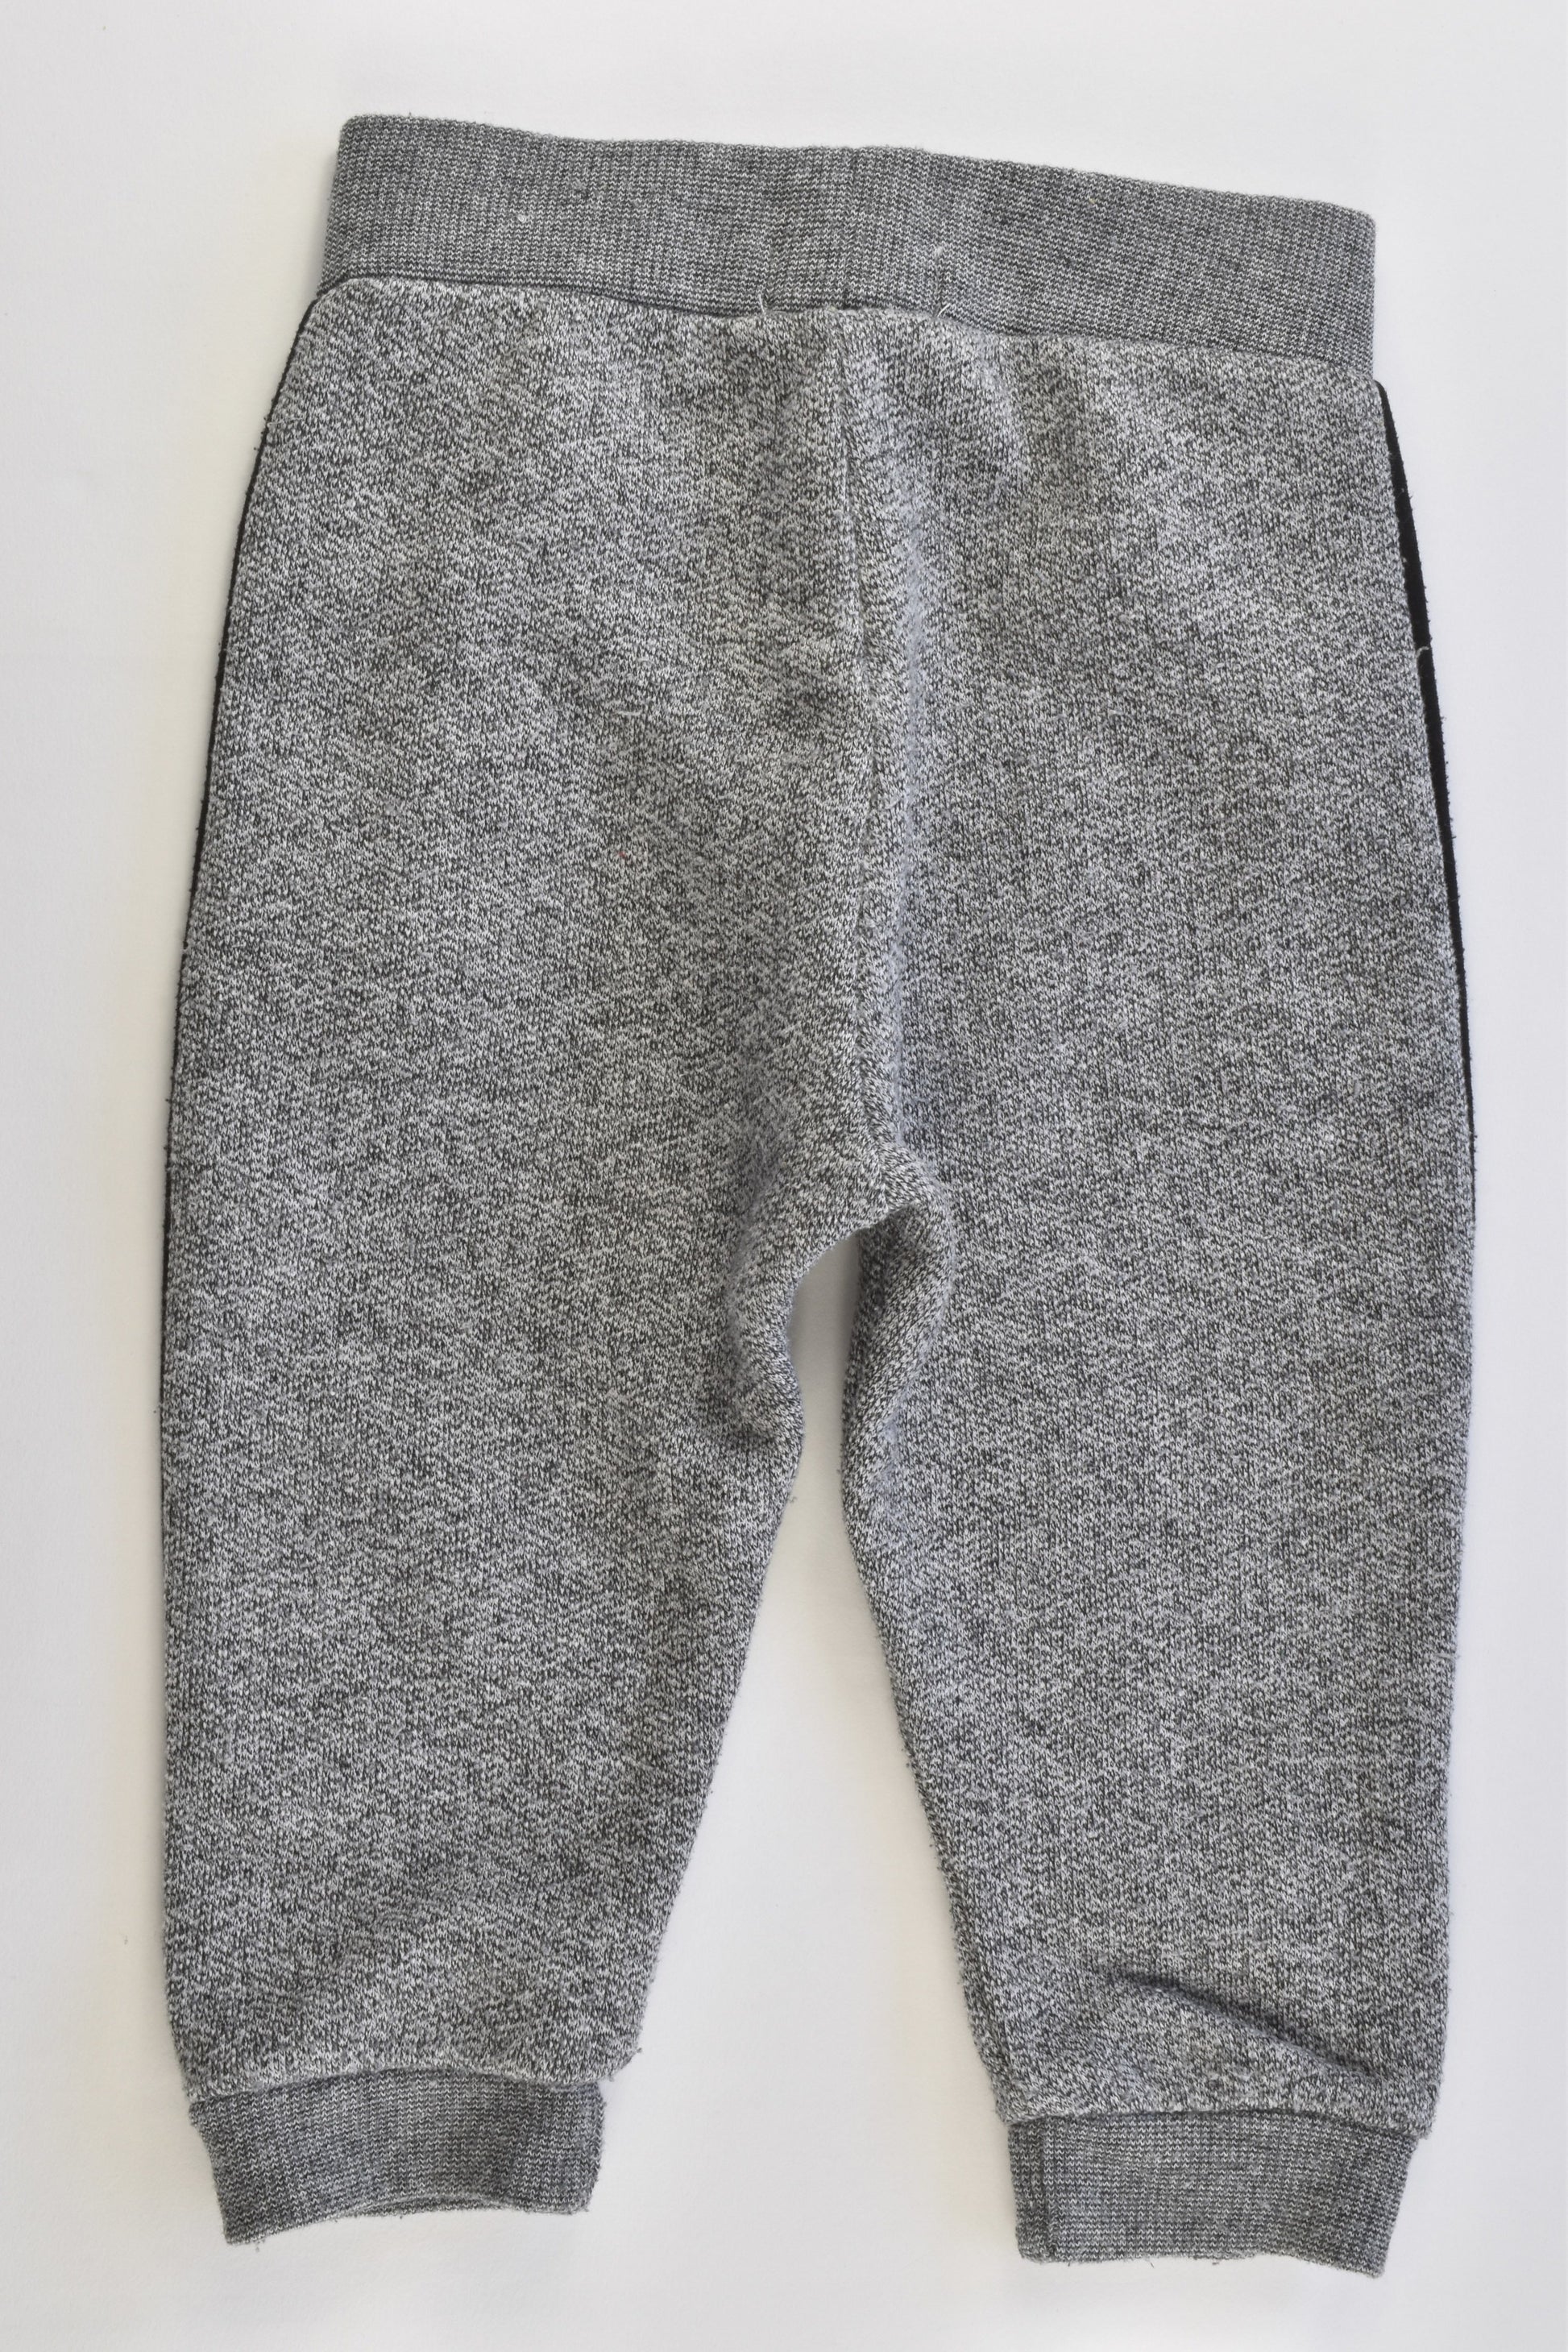 Primark Size 1 (12-18 months, 86 cm) Track Pants